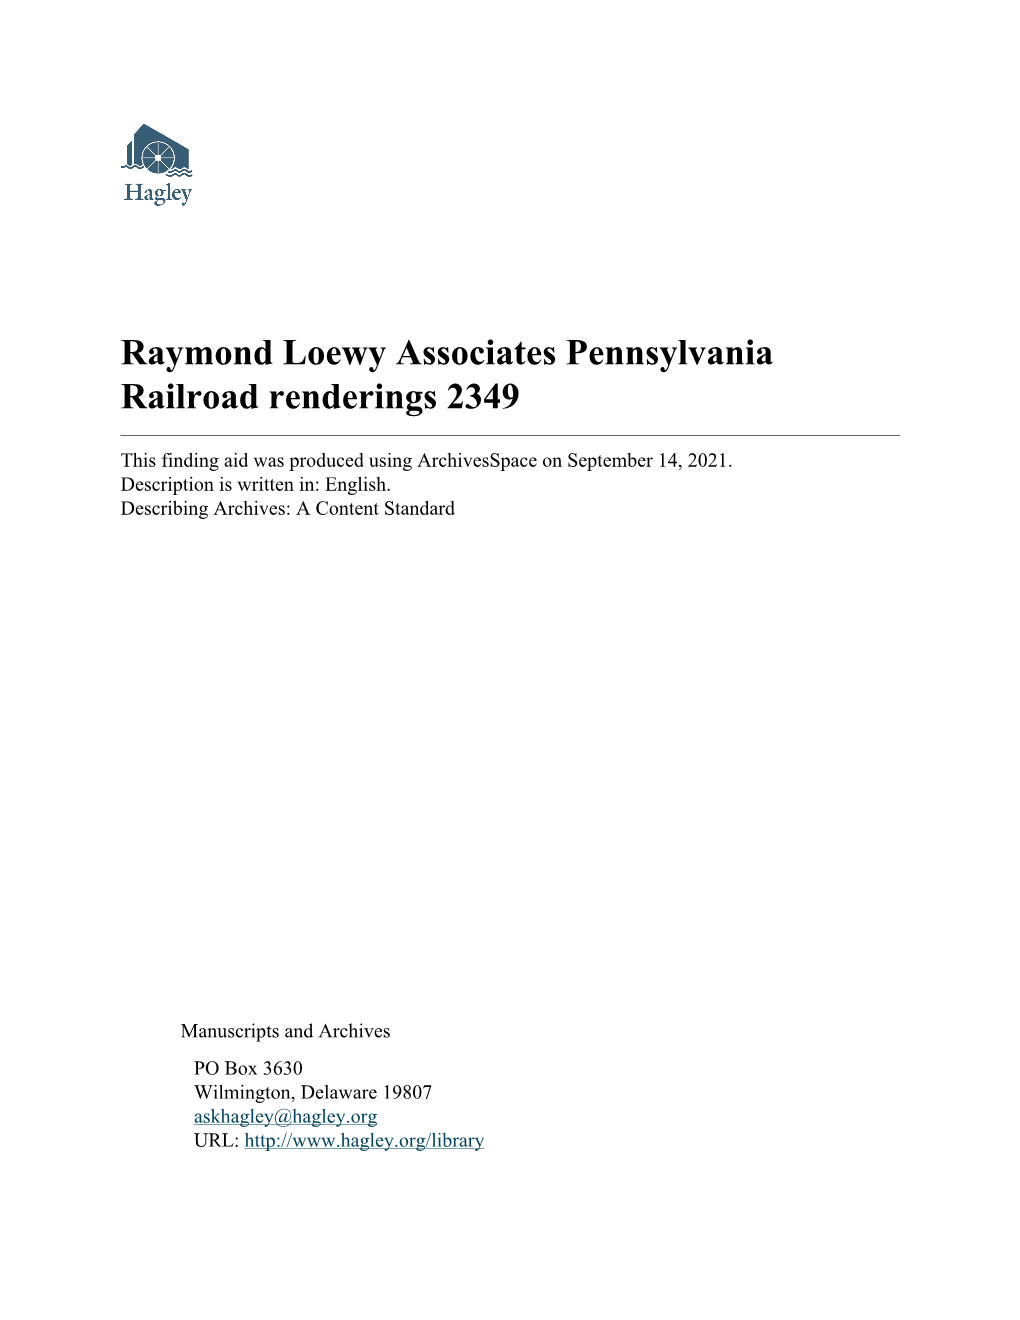 Raymond Loewy Associates Pennsylvania Railroad Renderings 2349